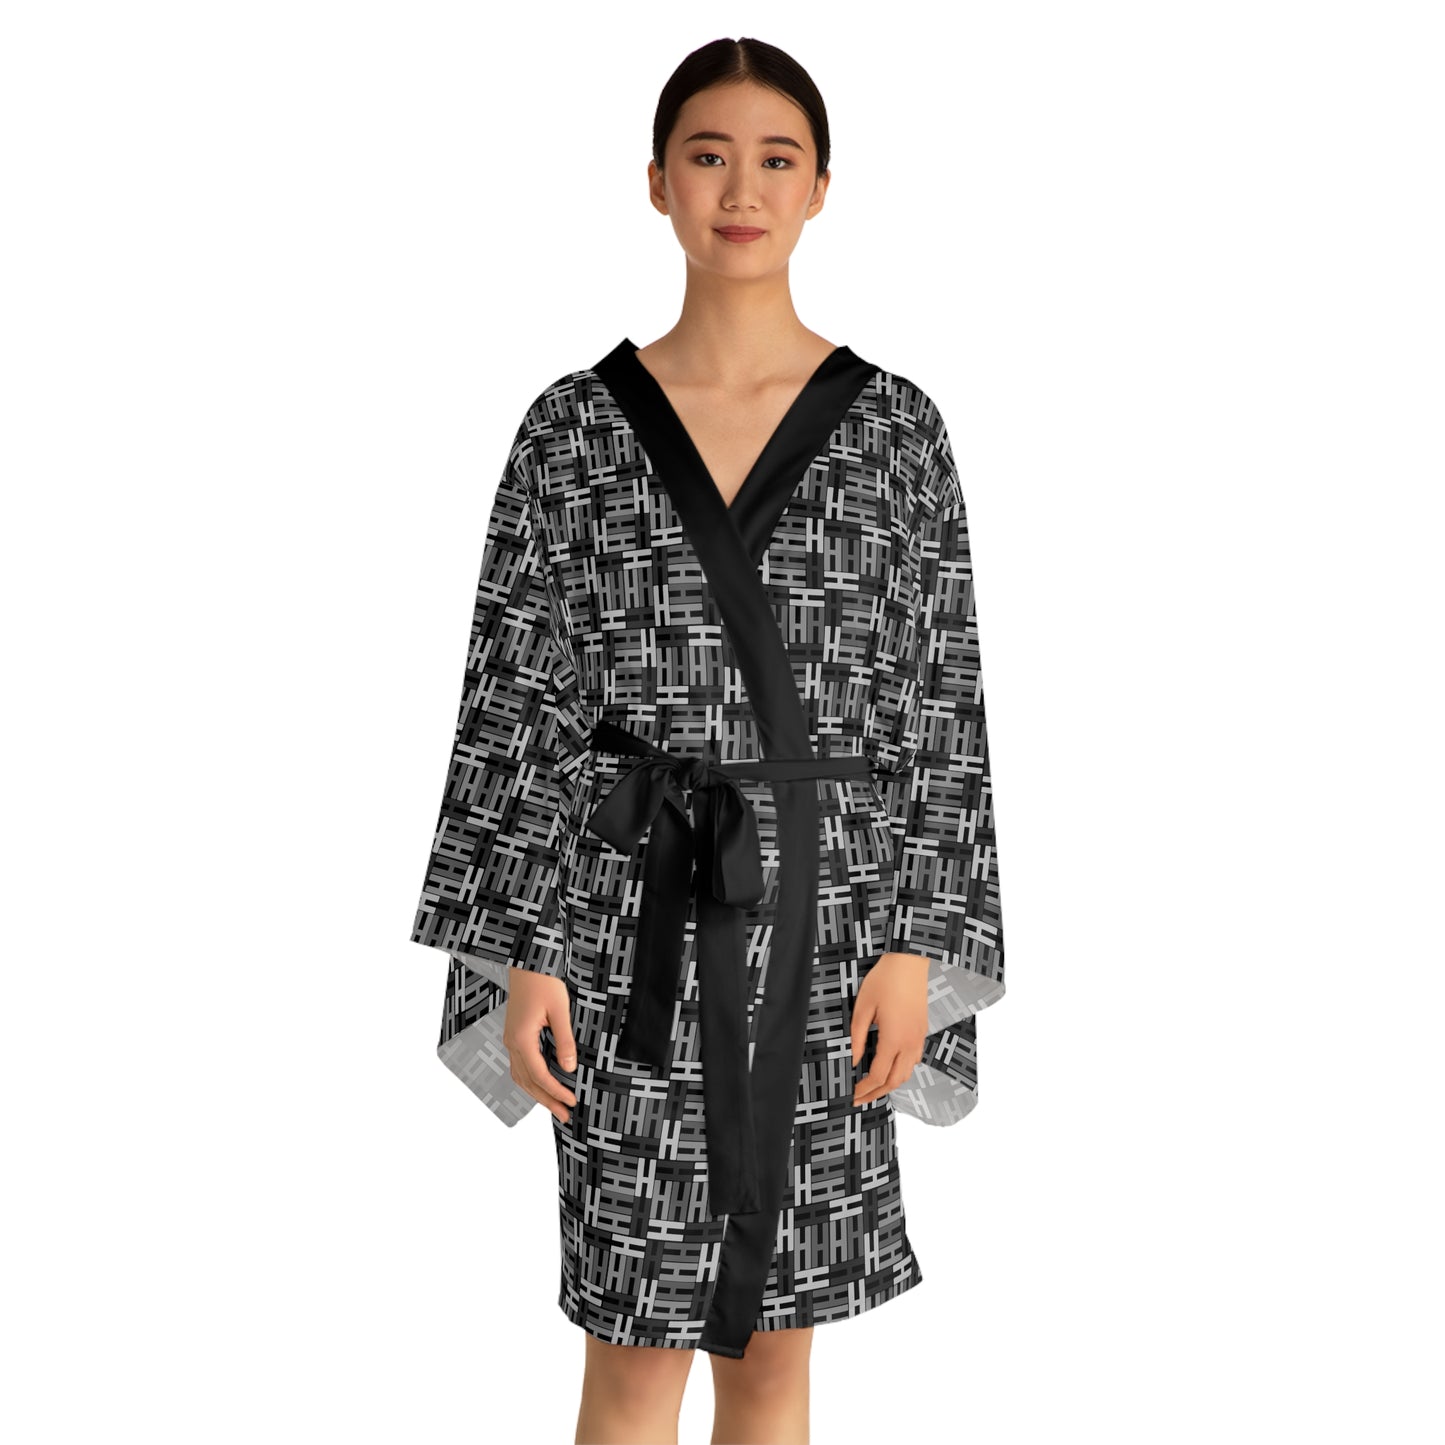 Letter Art - H - Black 000000 - Long Sleeve Kimono Robe (AOP)